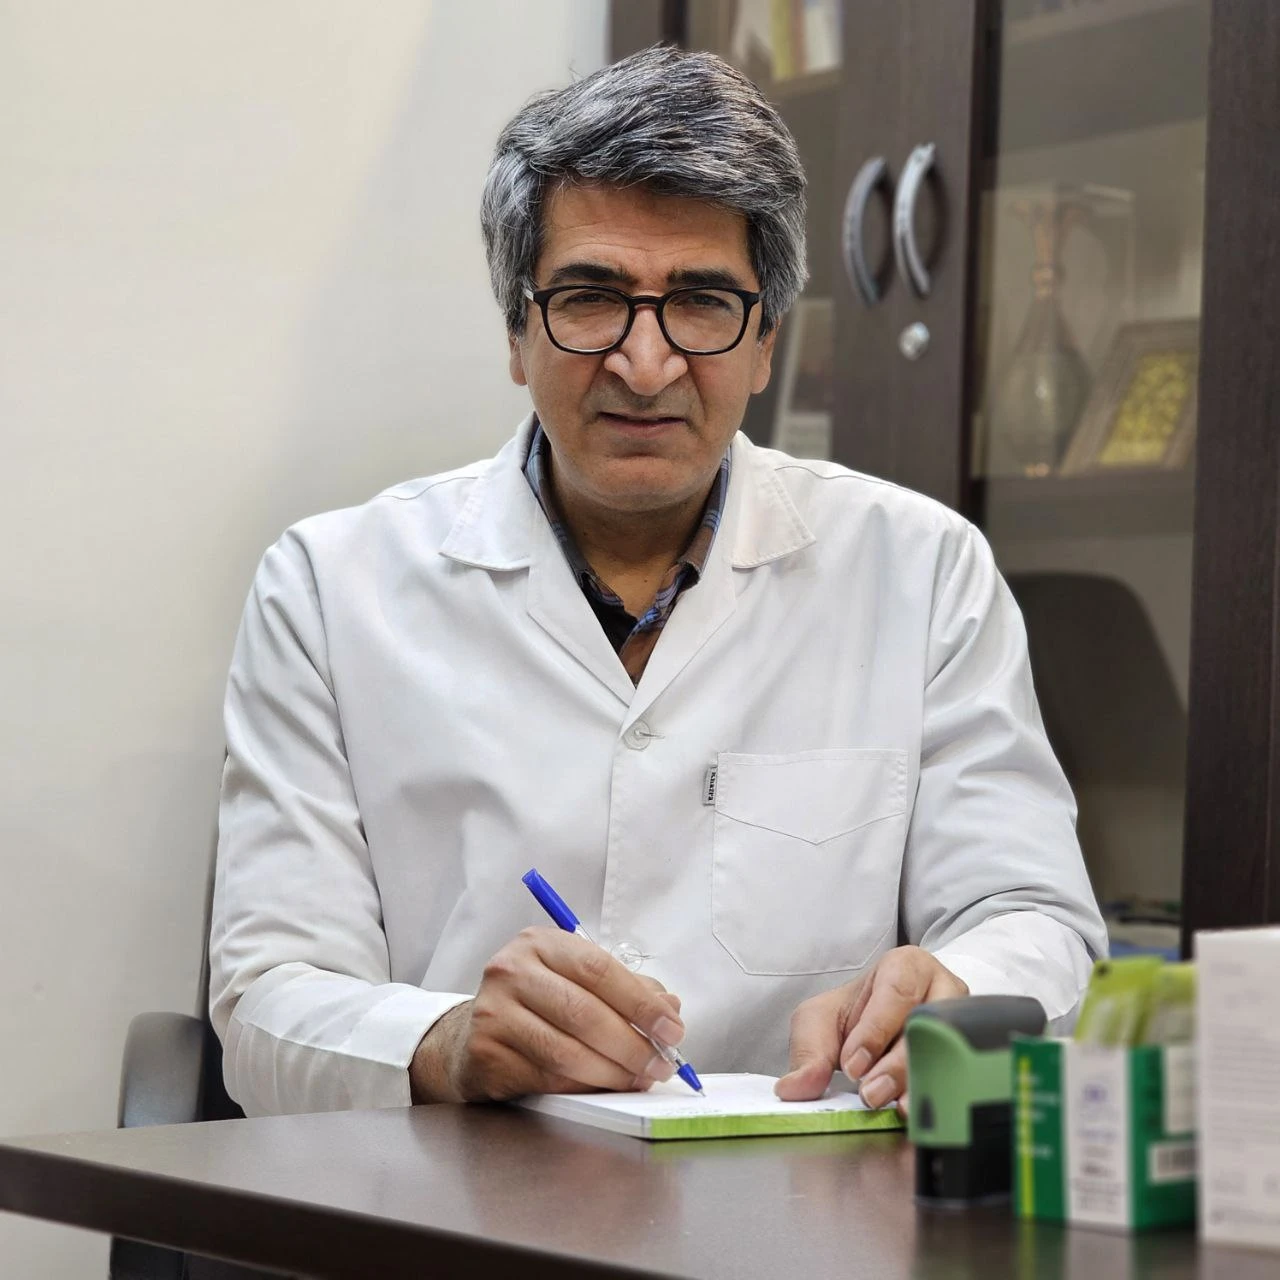 مشاوره پزشکی با الدكتور سیدجواد مجتبوی